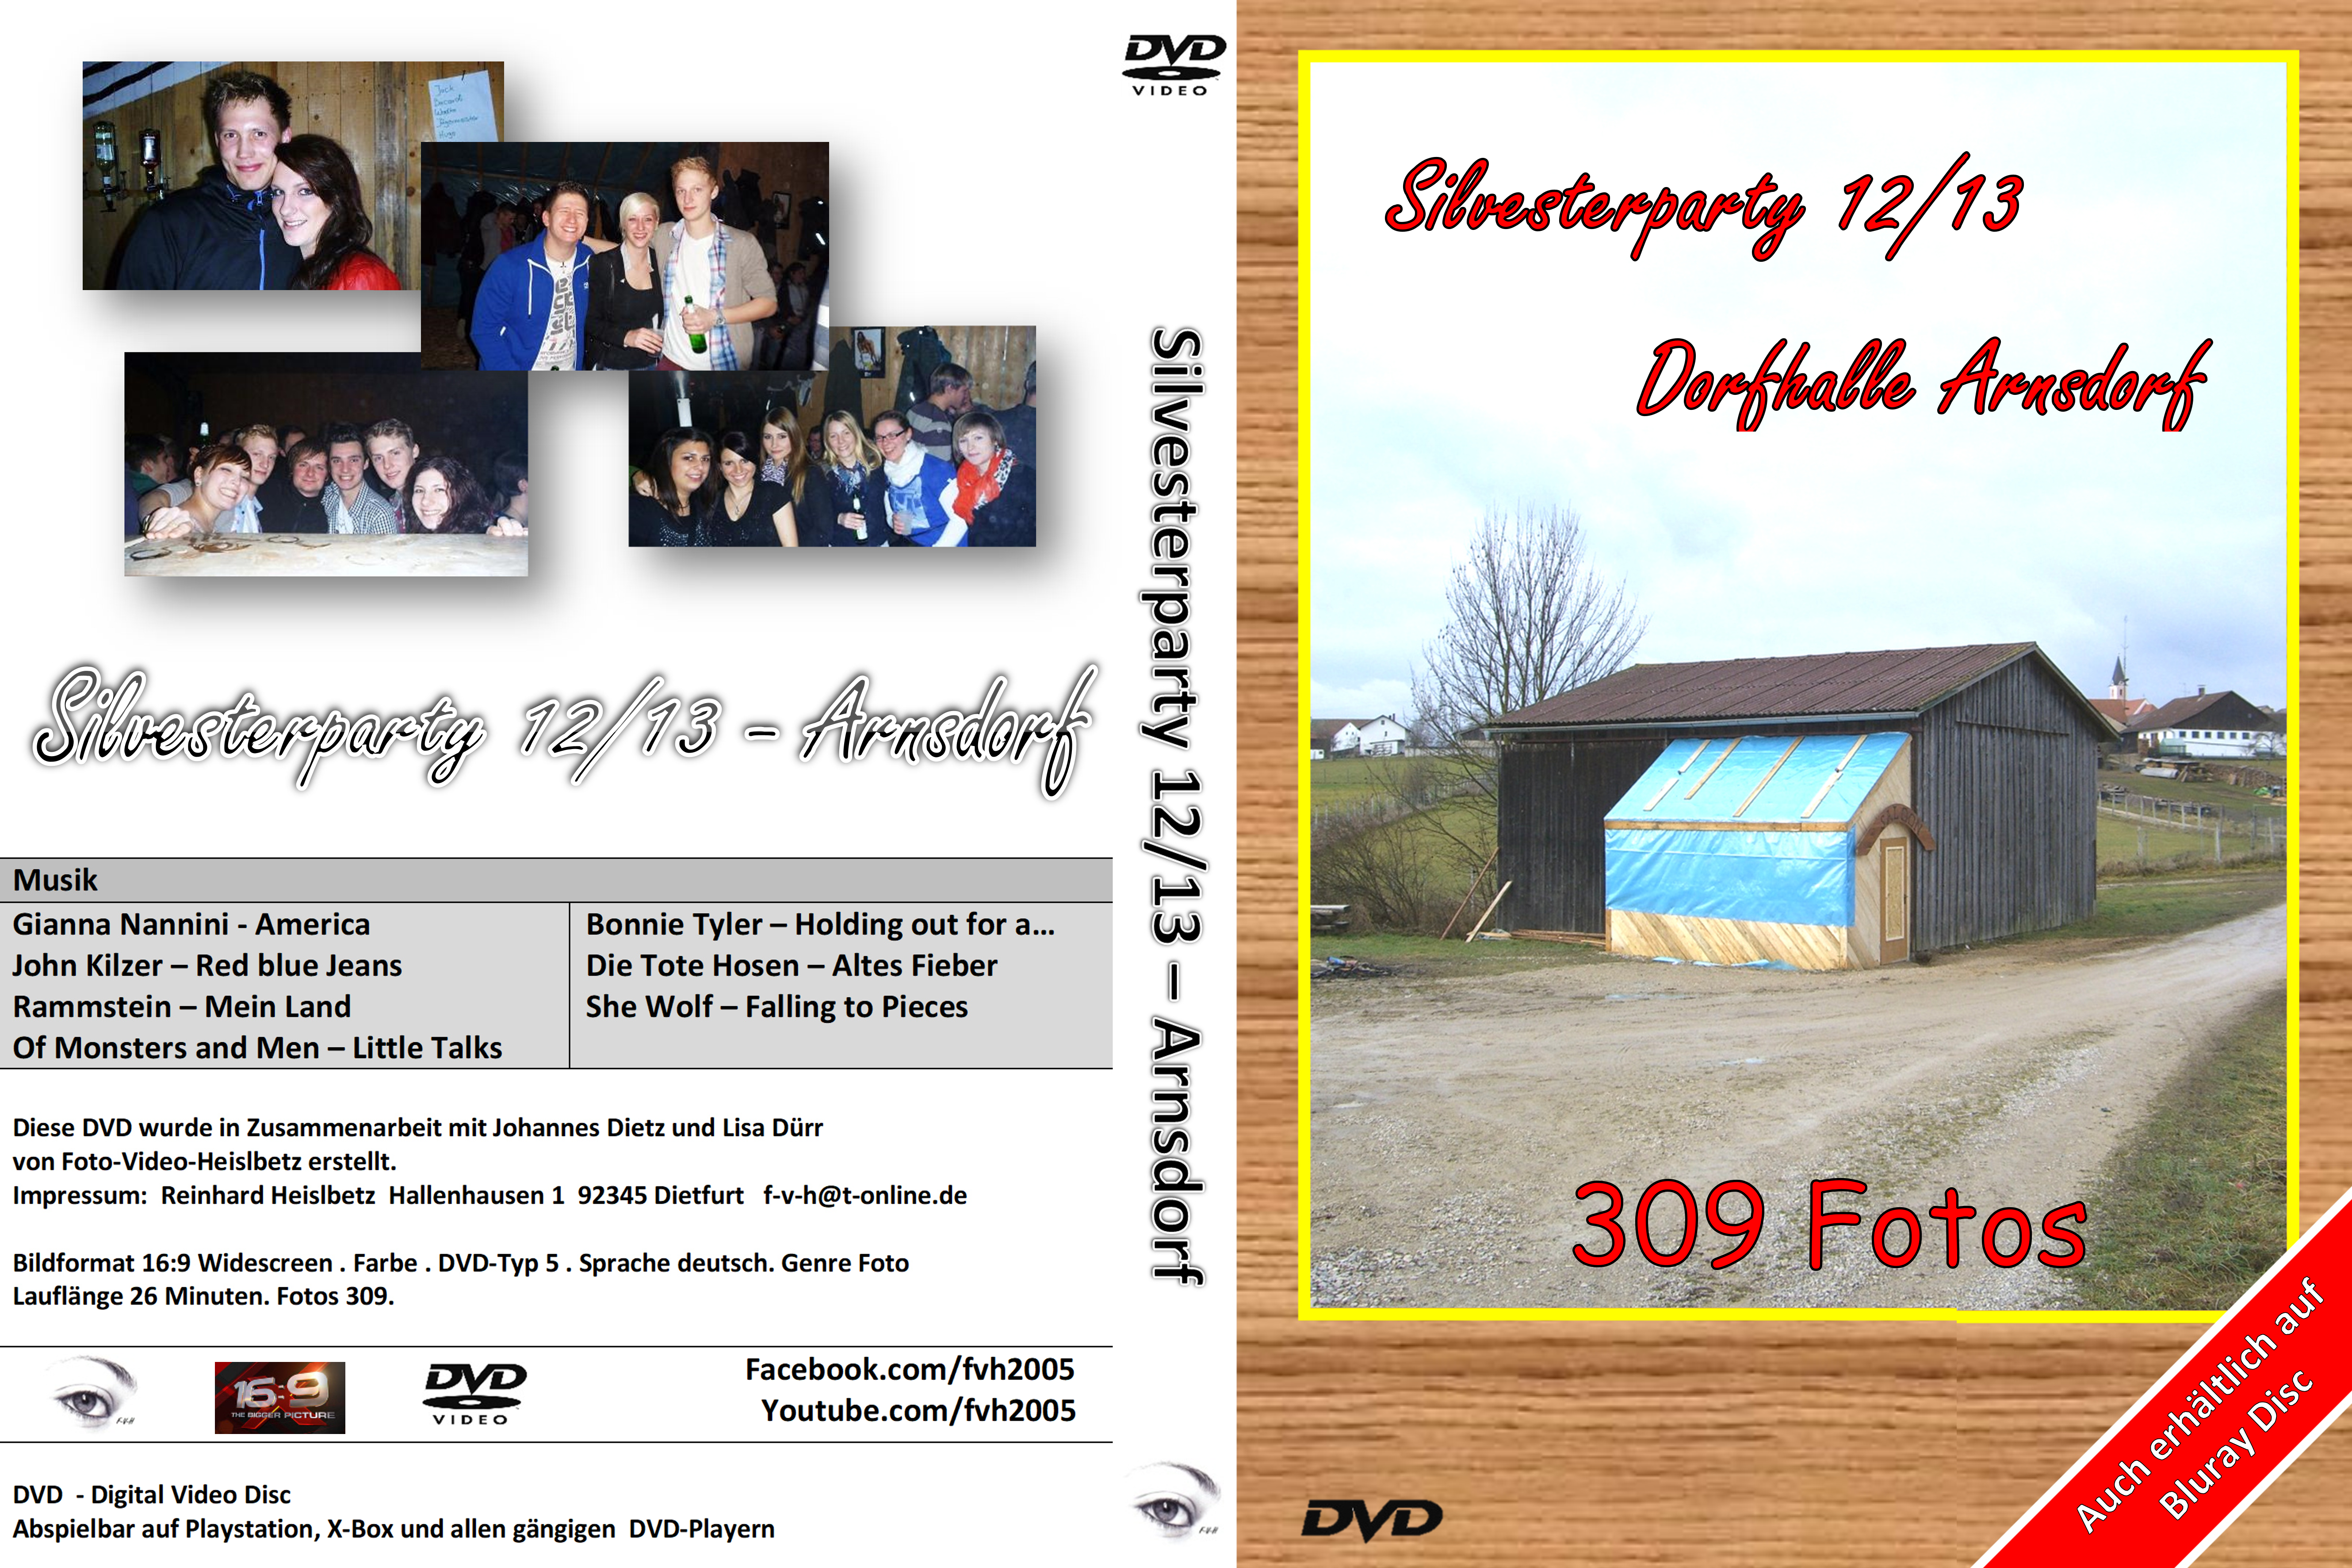 DVD 32